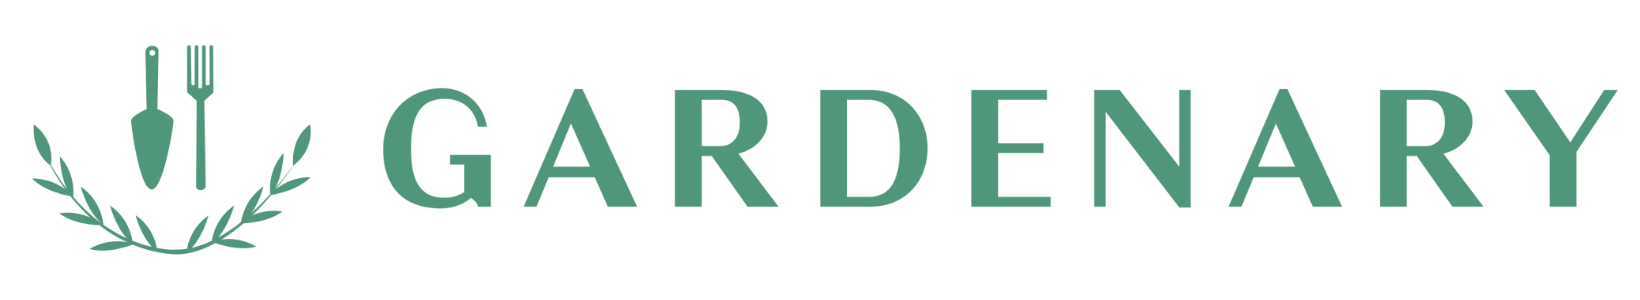 Gardenary logo